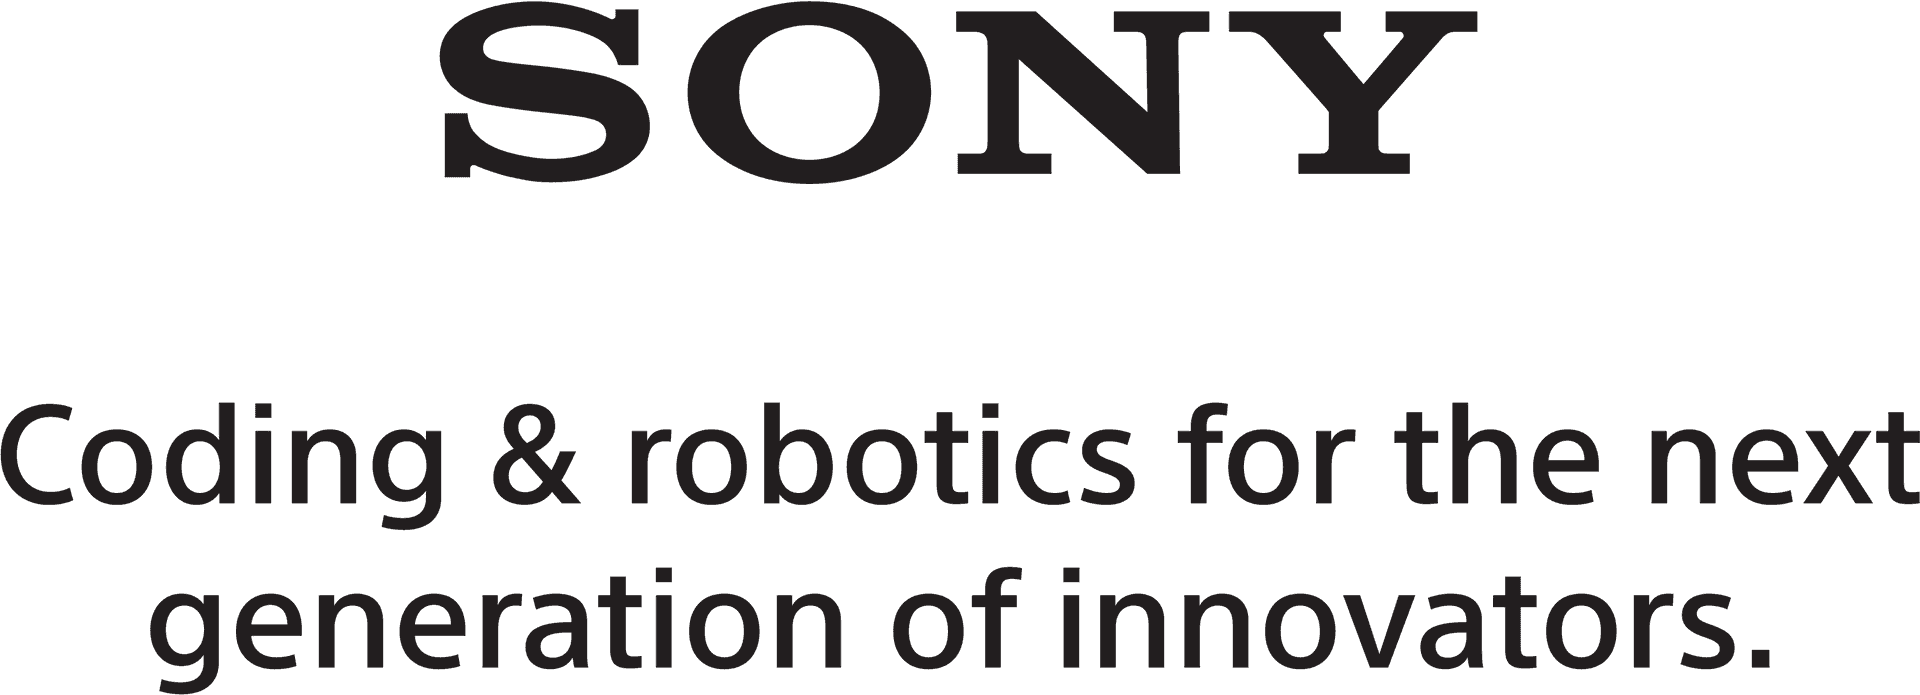 Sony Coding Robotics Innovators Logo PNG image